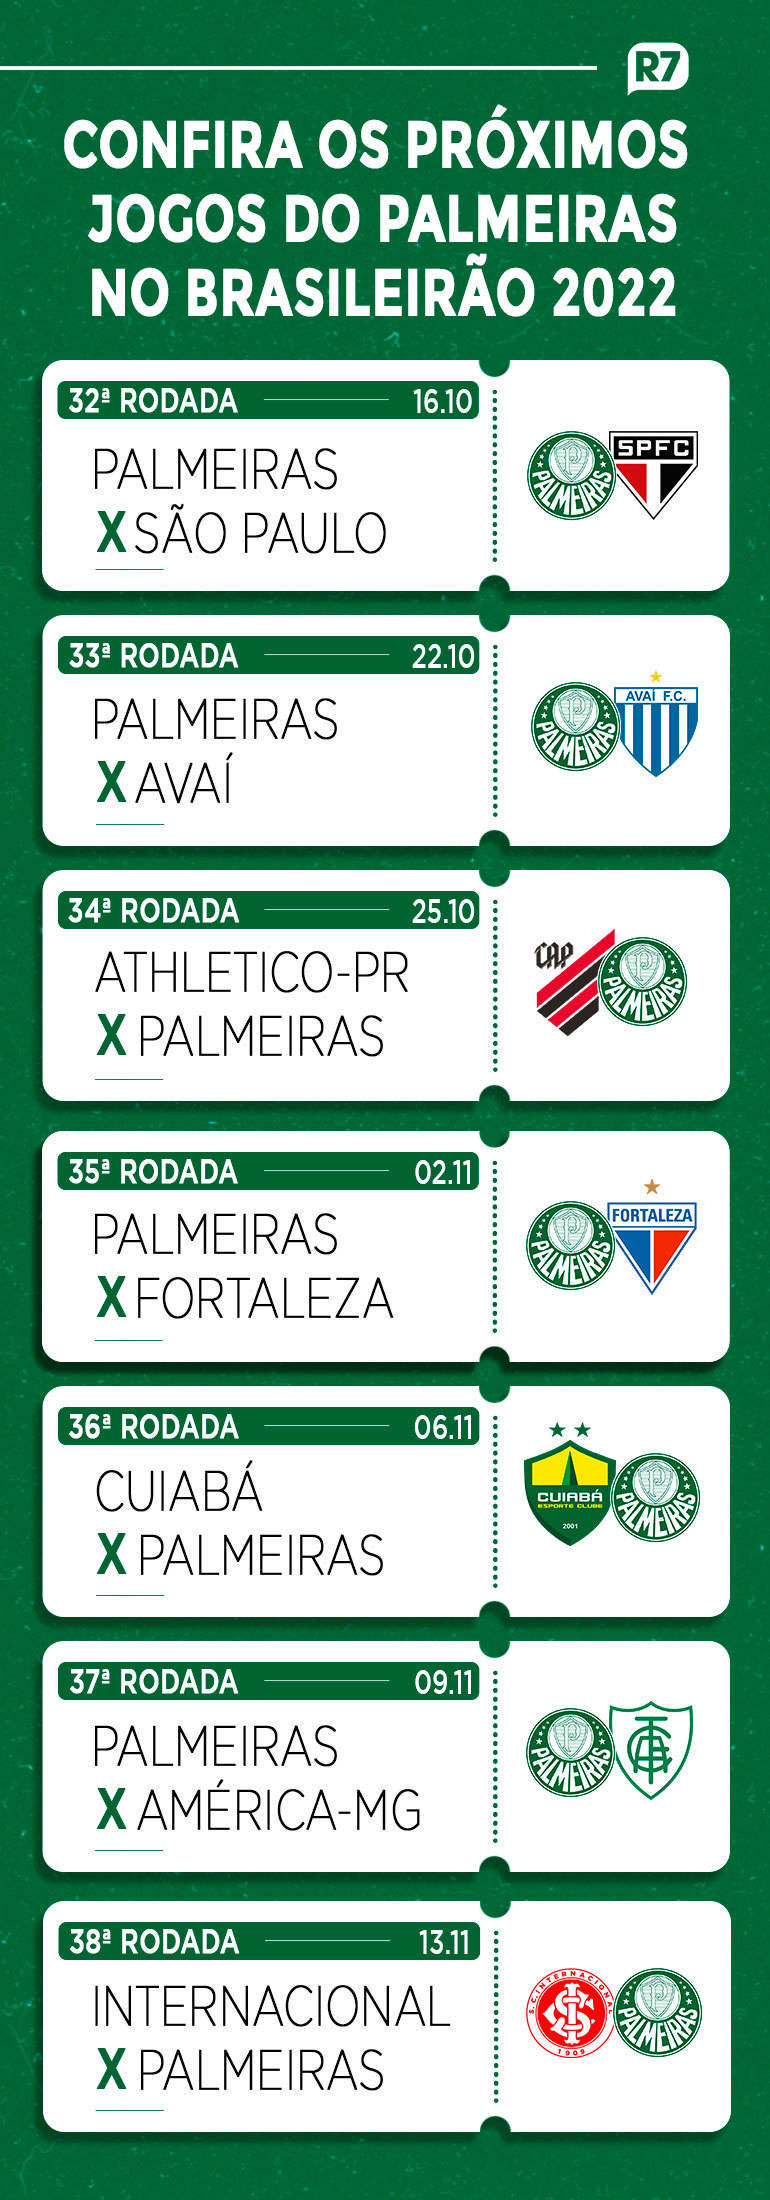 Confira 'as finais' que restam para o Palmeiras na temporada